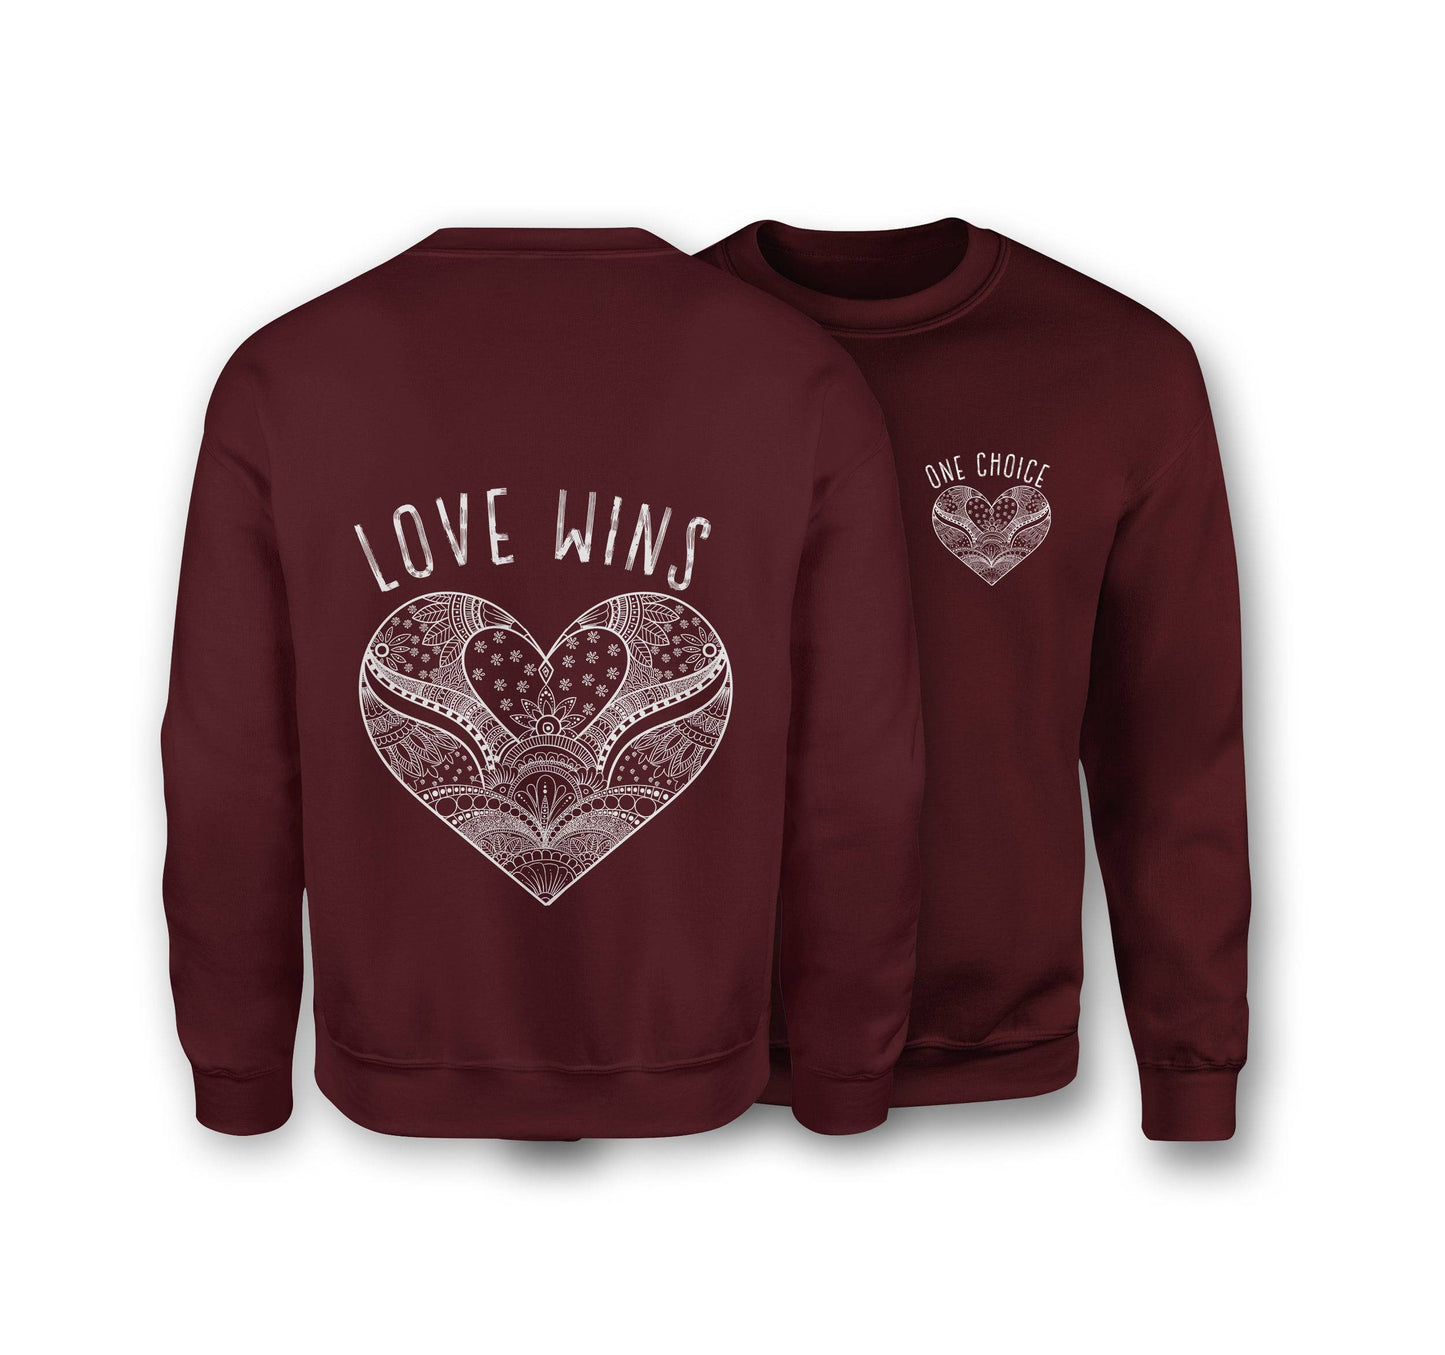 Love Wins Sweatshirt - Organic Cotton Sweatshirt - One Choice Apparel